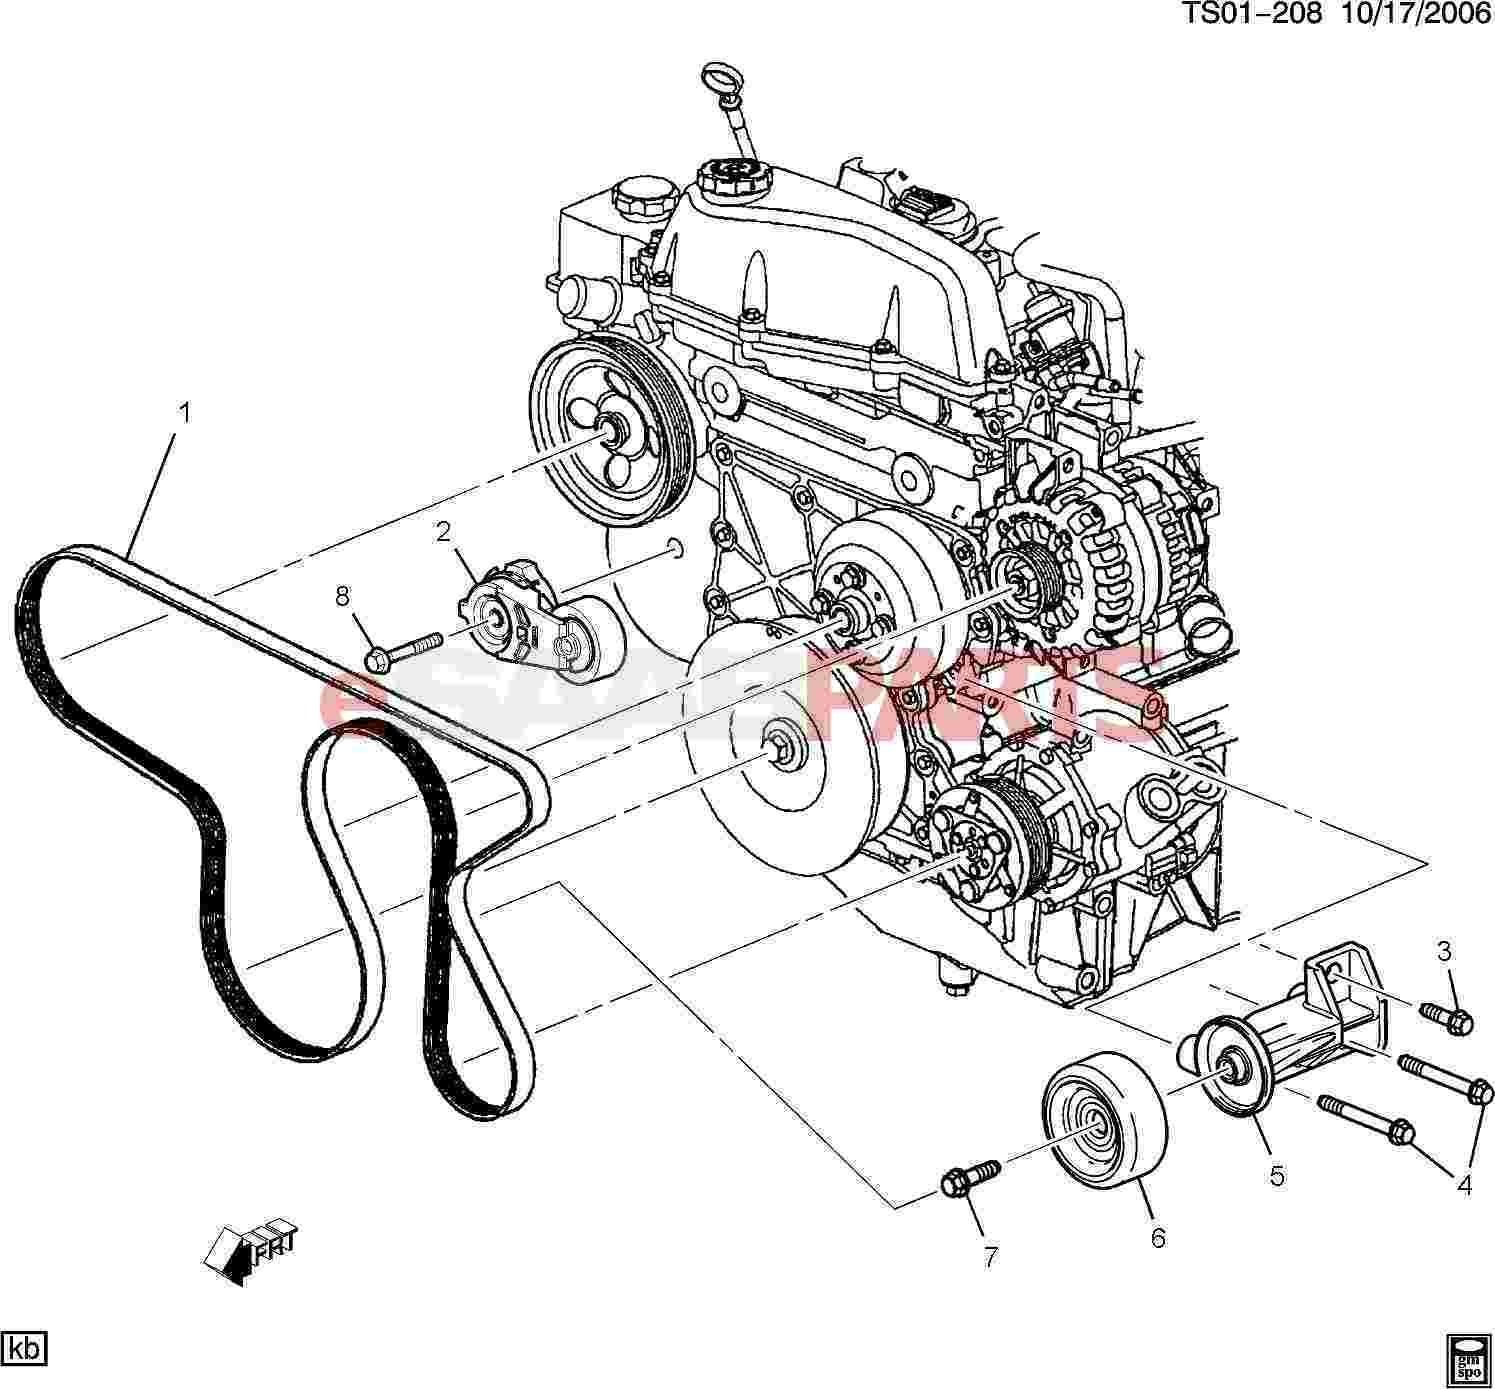 2006 ford F150 Parts Diagram 2008 Gmc Sierra Parts Diagram ] Saab Bolt Hfh M10x1 535 32thd 22 3